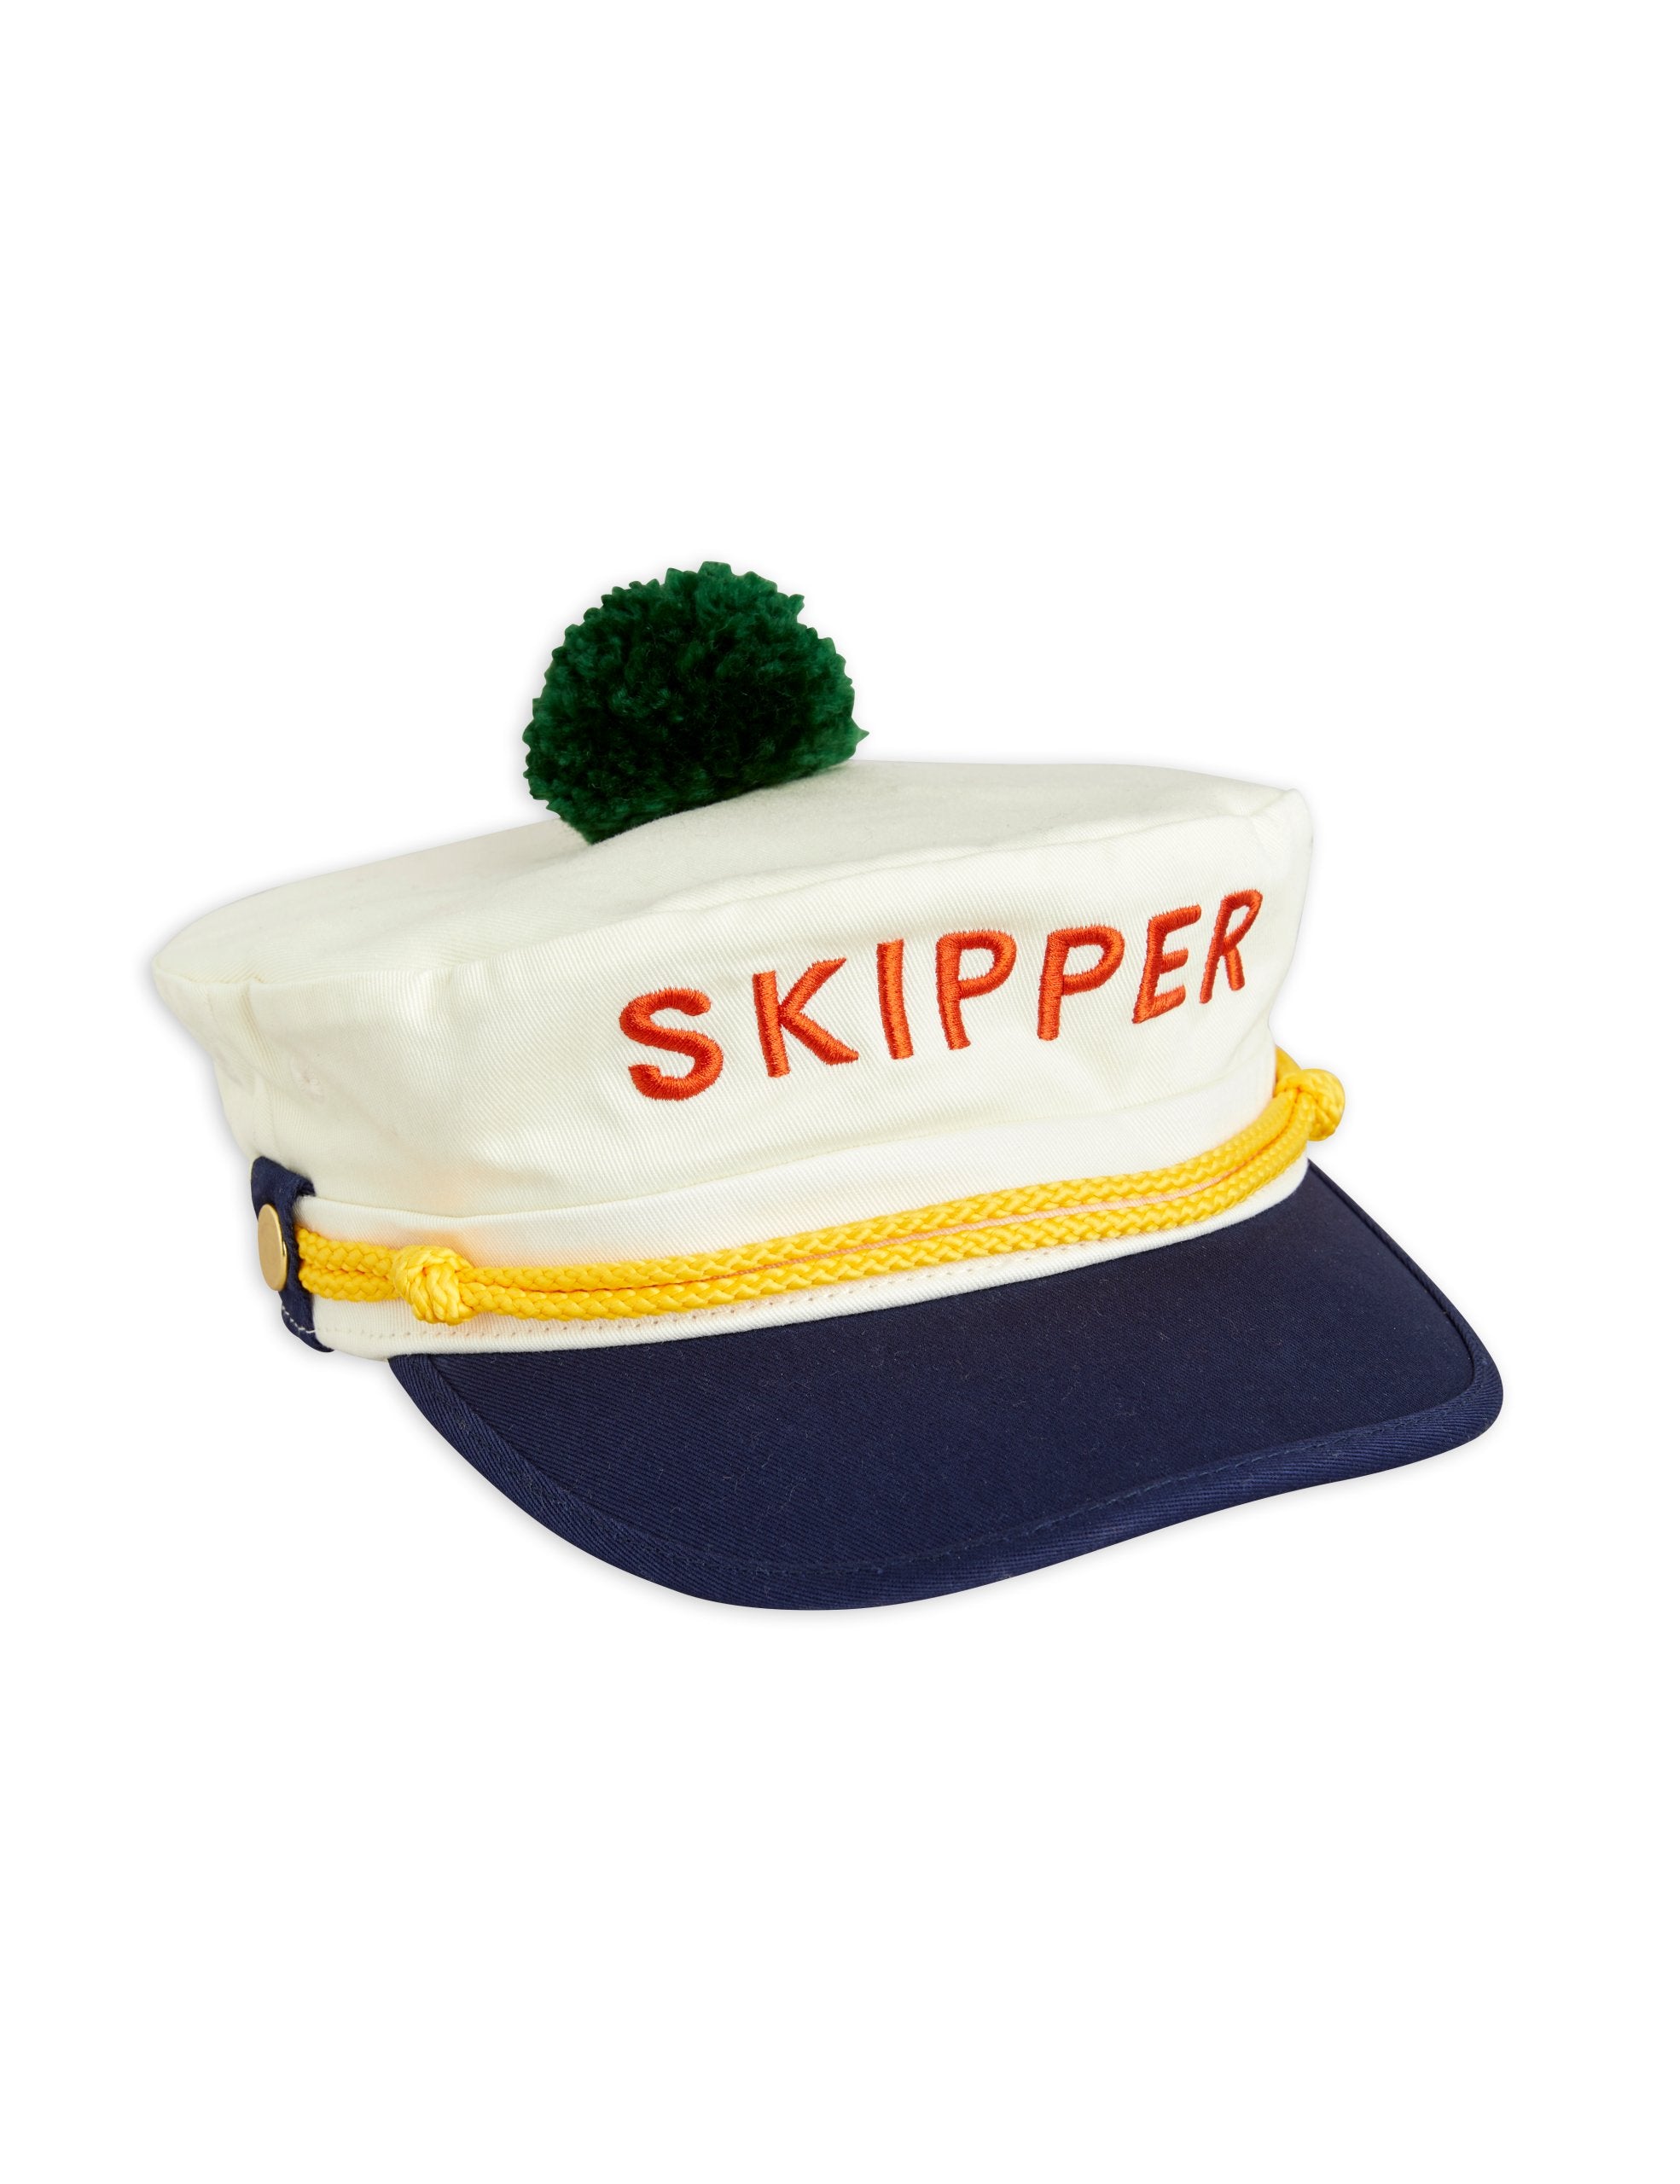 New Mini Rodini | Skipper hat